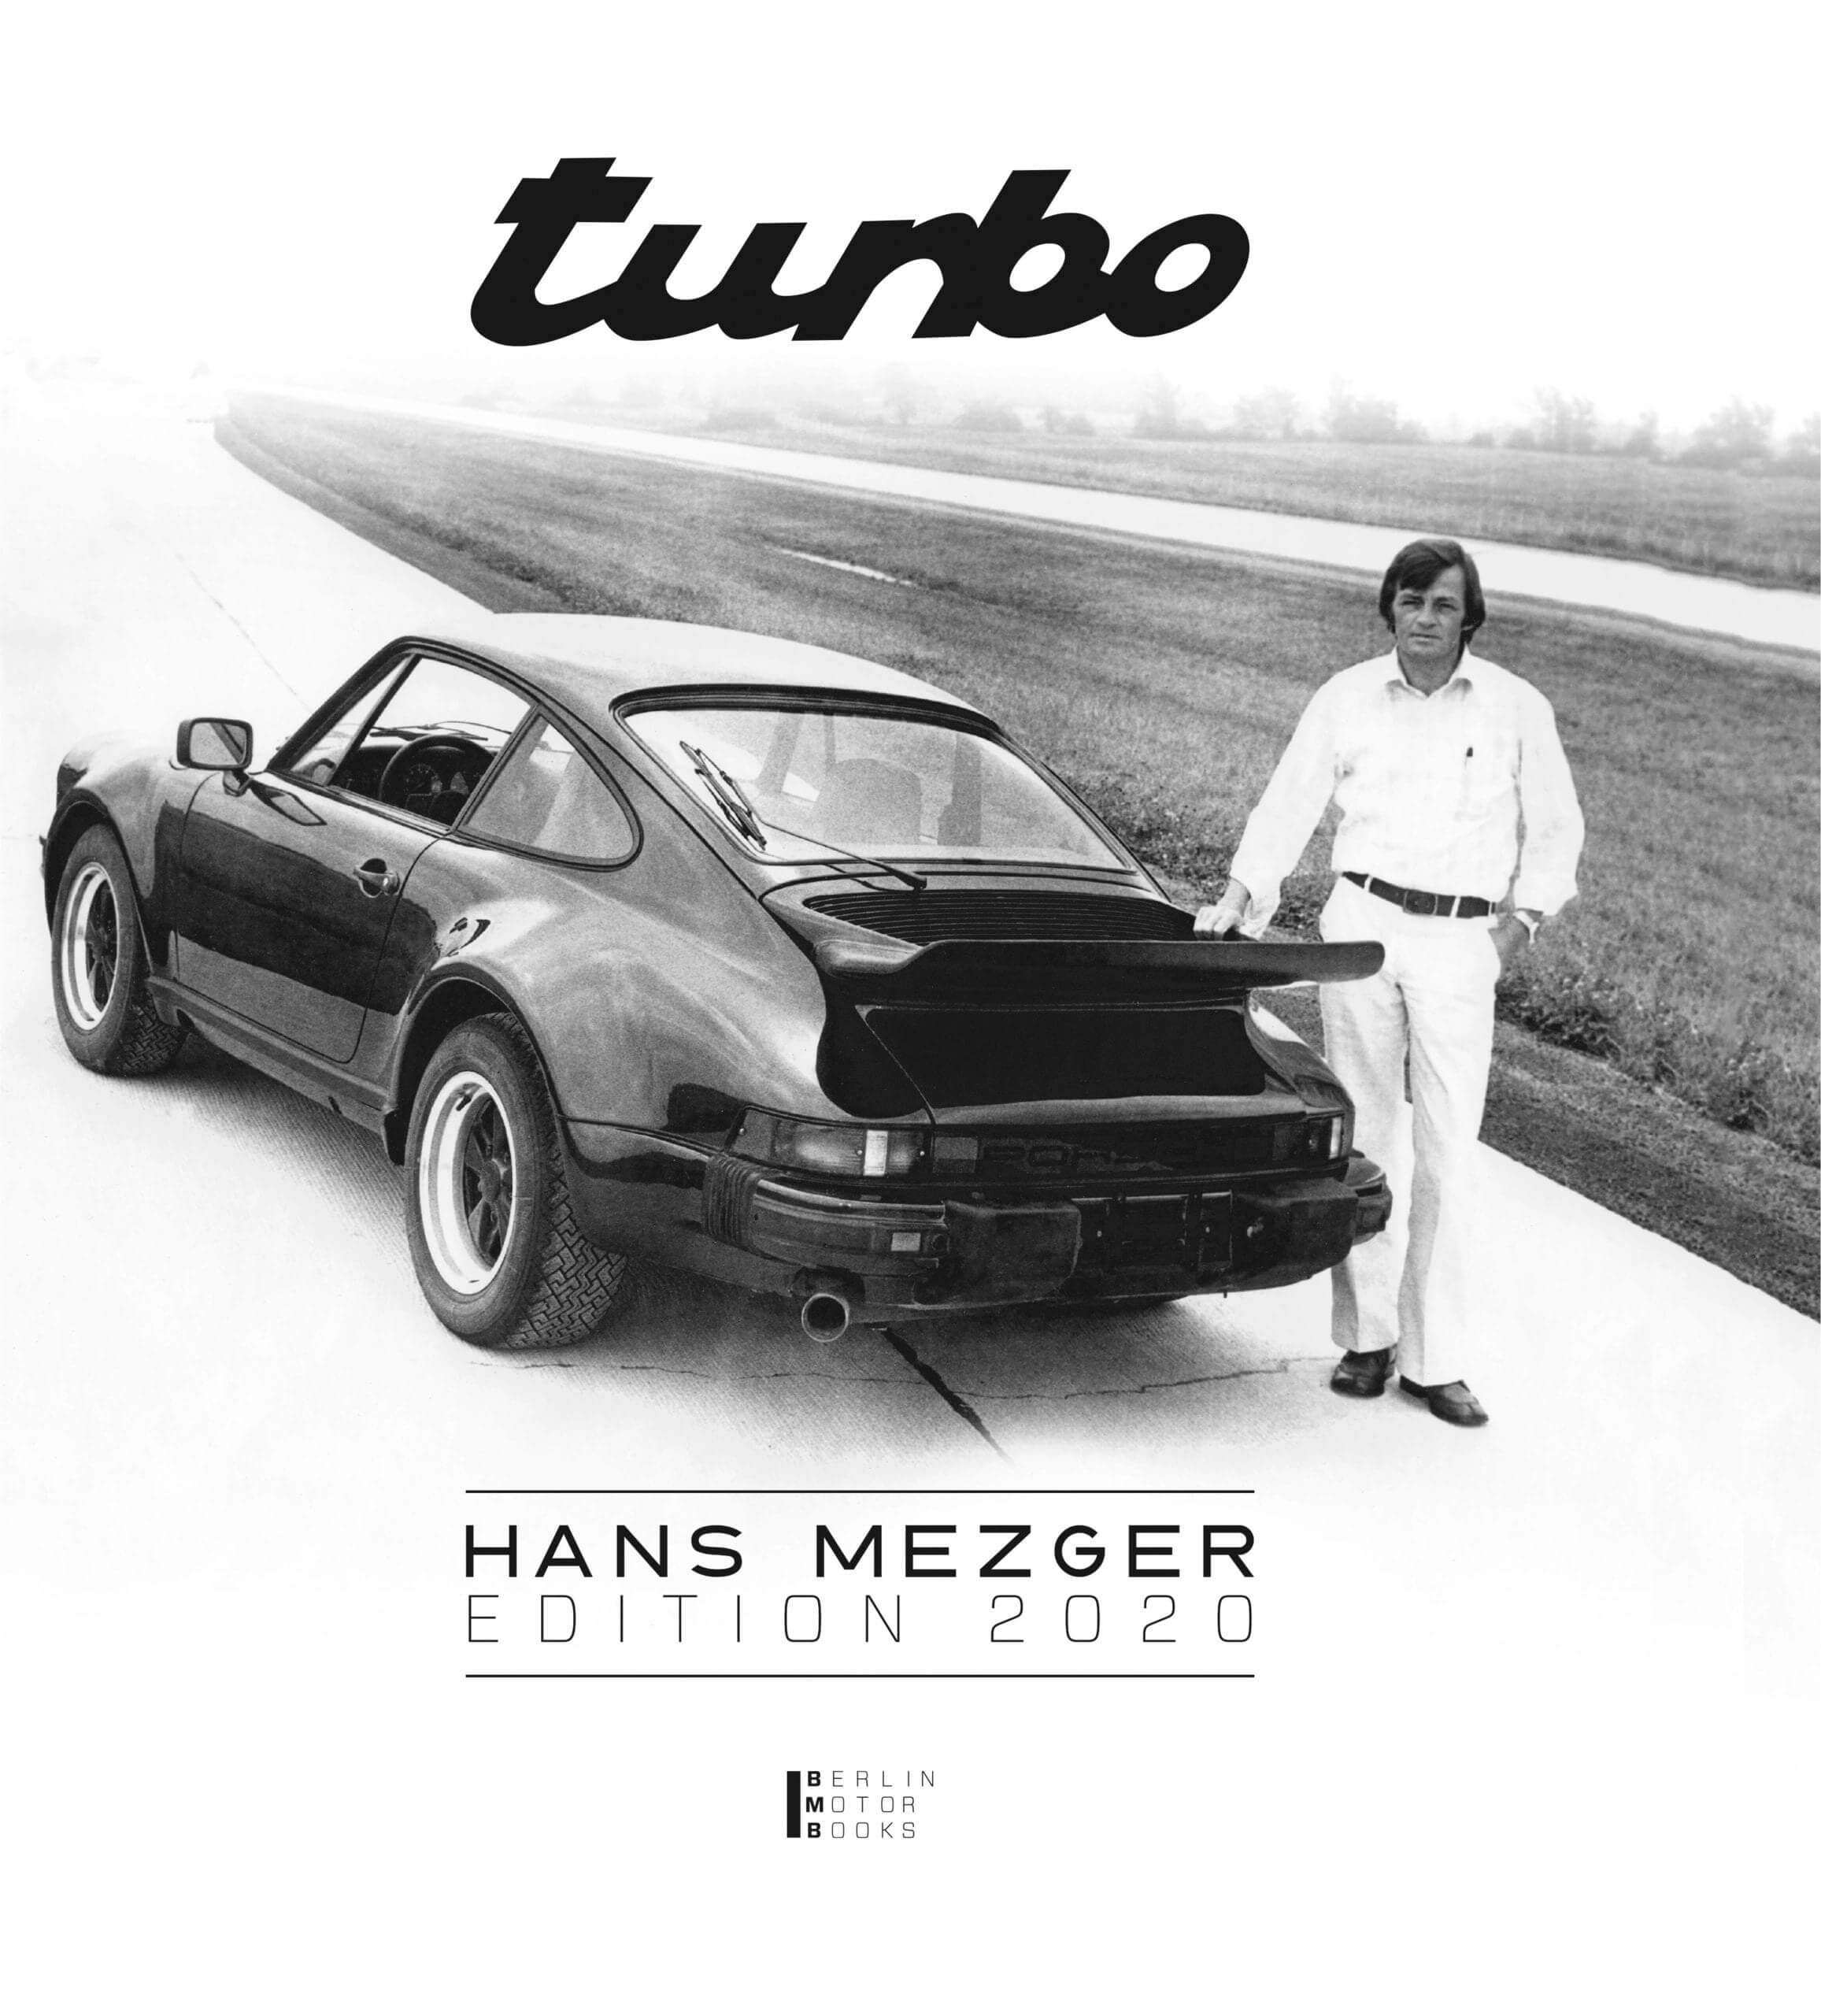 Porsche 911 Turbo Air Cooled Years 1975 – 1998 / Hans Mezger Edition 2020 –  Berlin Motor Books